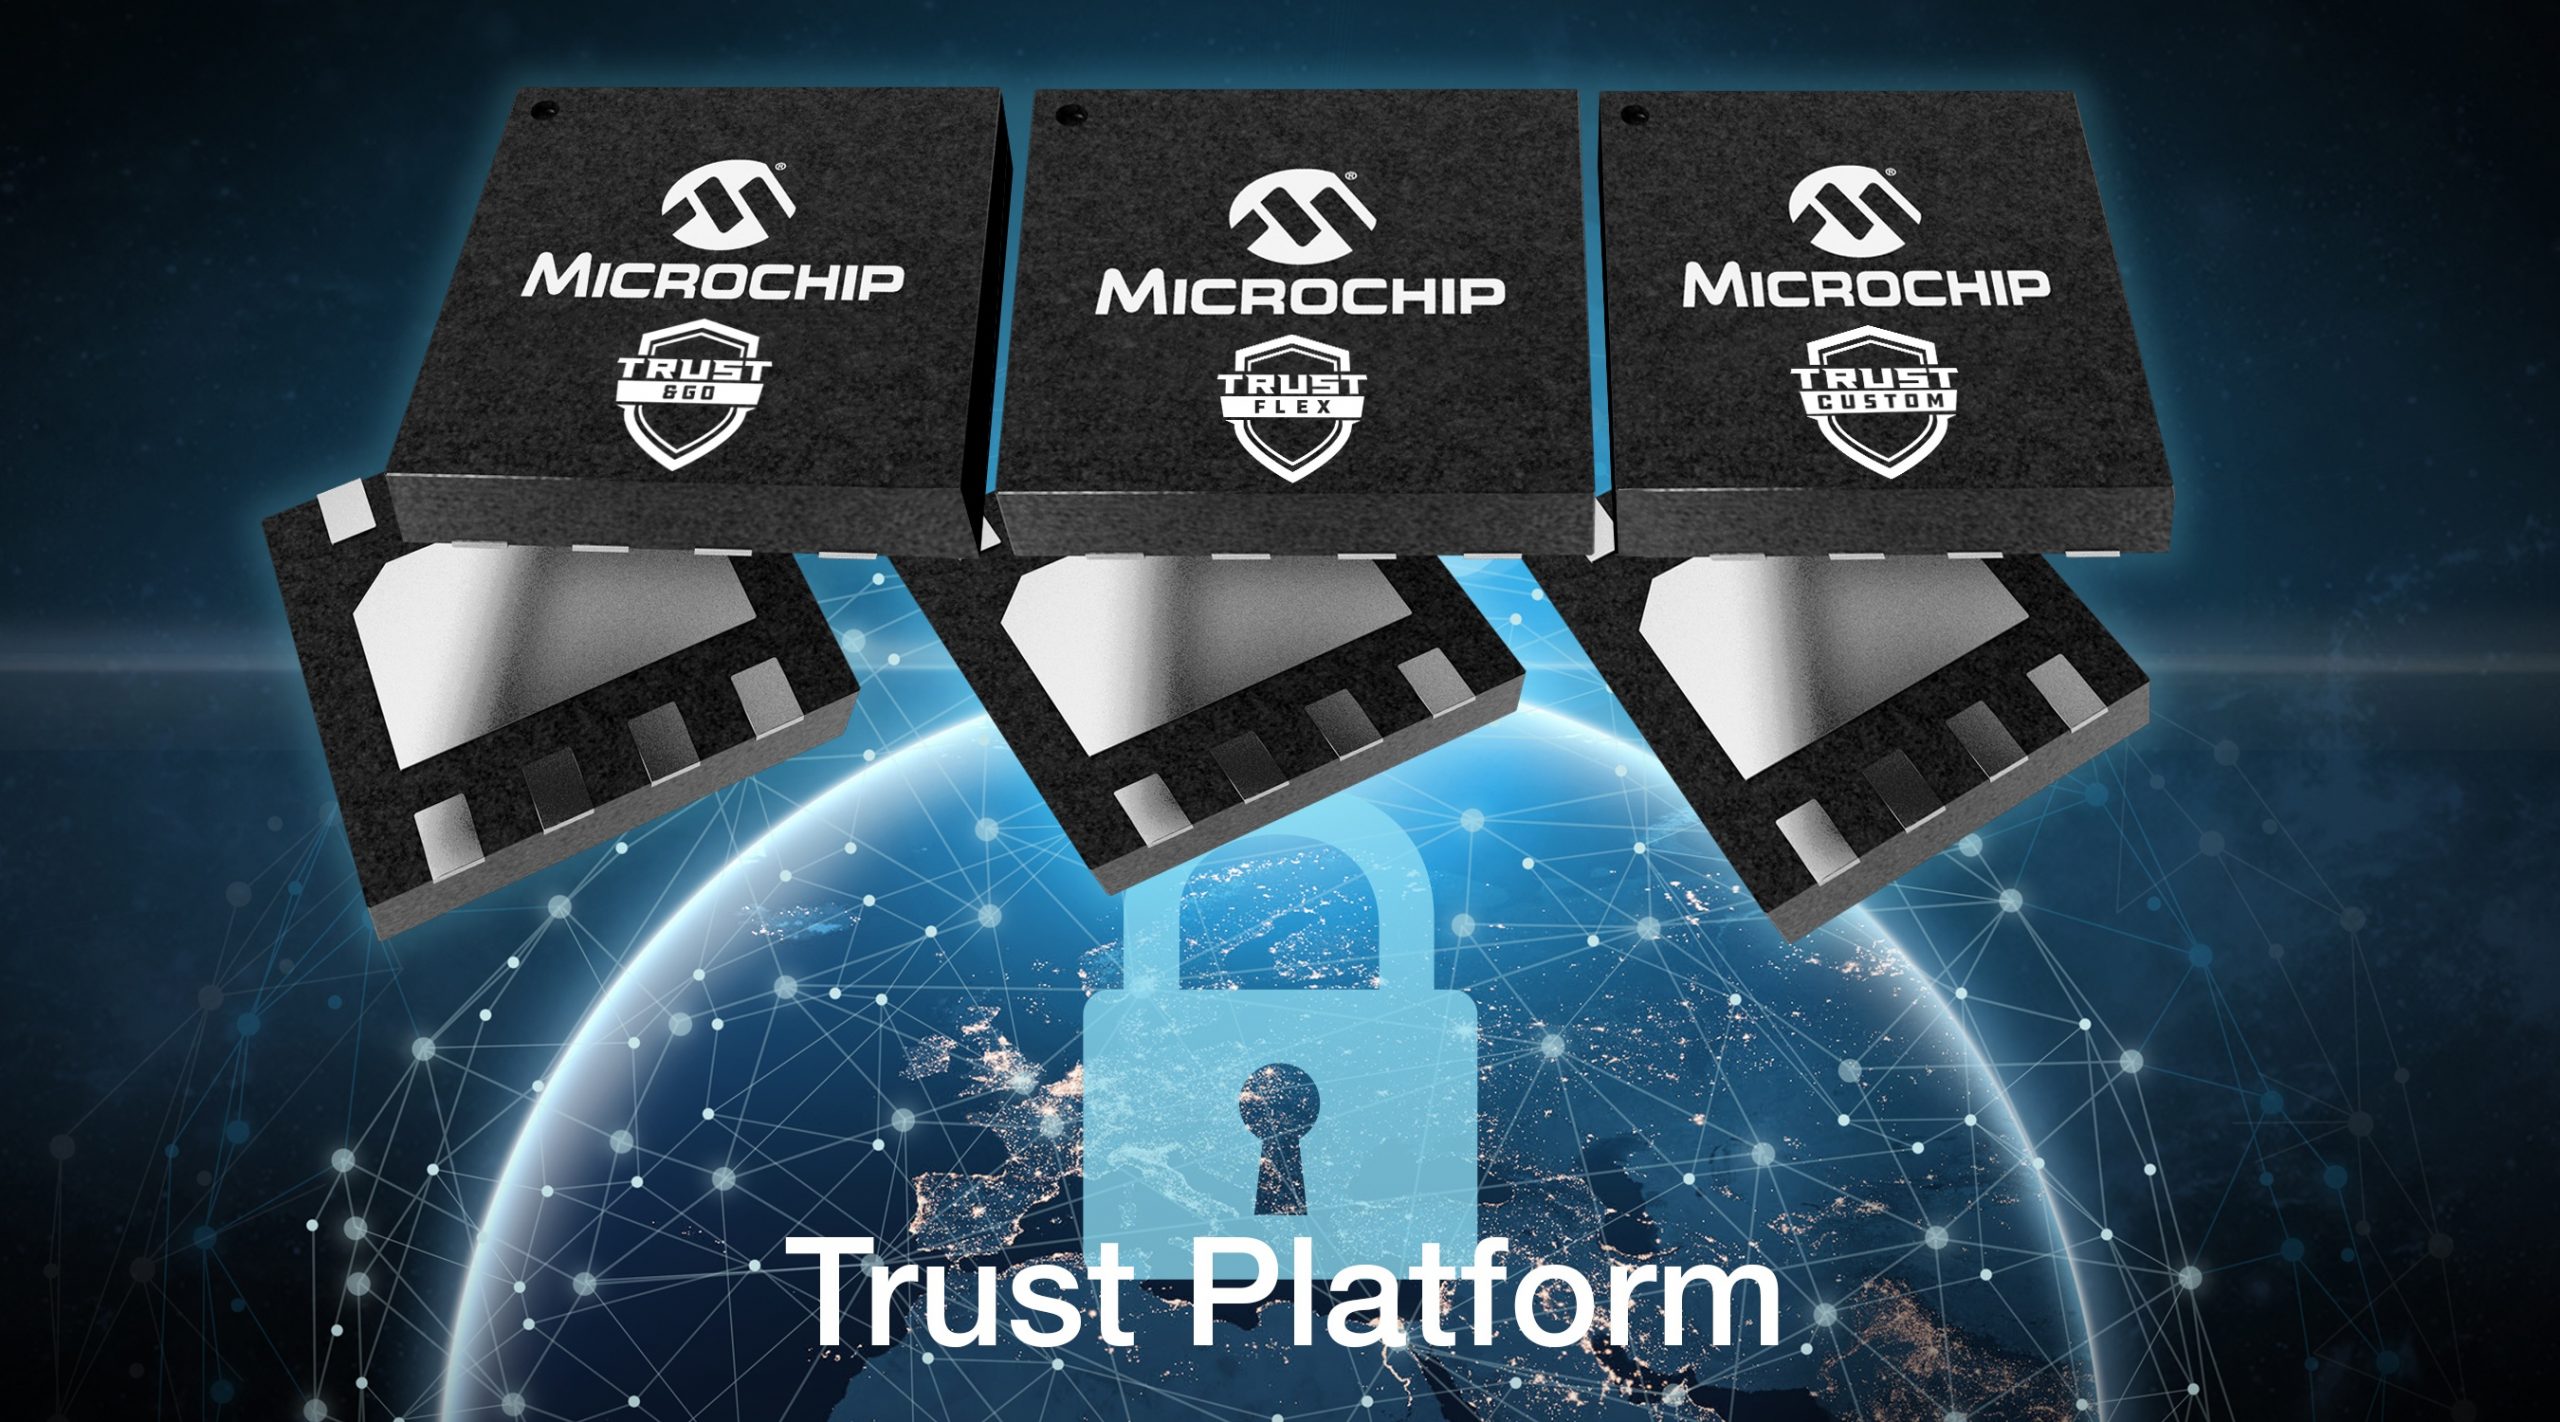 Microchip simplifies hardware-based IoT security